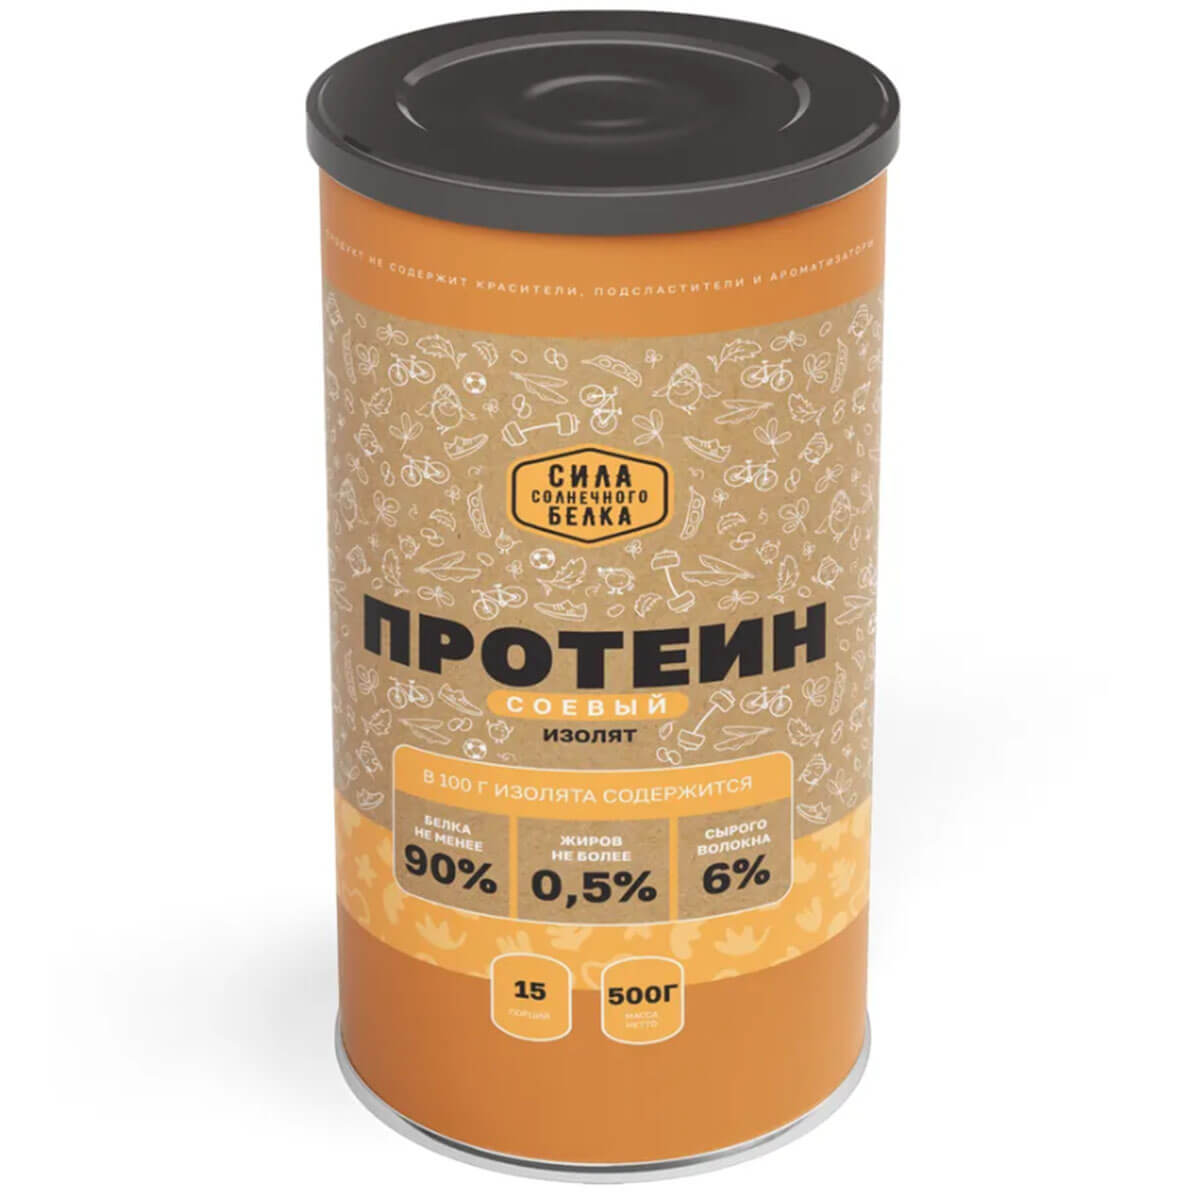 Протеин соевый (изолят), 500 гр, Оргтиум